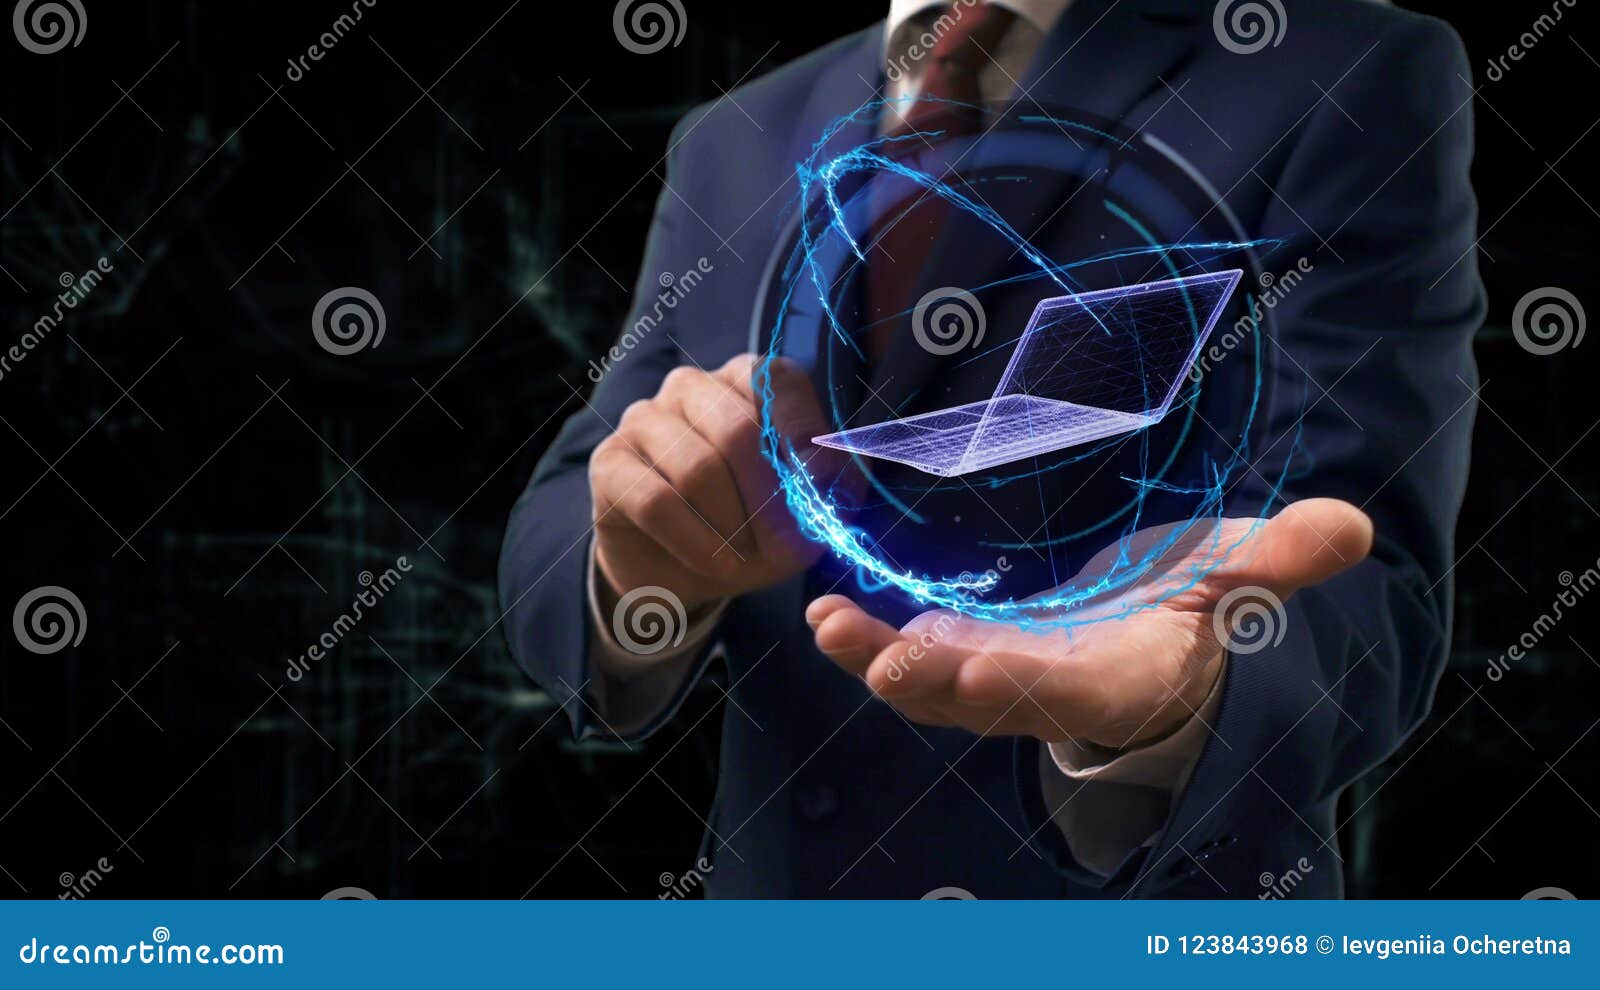 https://thumbs.dreamstime.com/z/el-hombre-de-negocios-muestra-ordenador-port%C3%A1til-del-holograma-d-concepto-en-su-mano-123843968.jpg